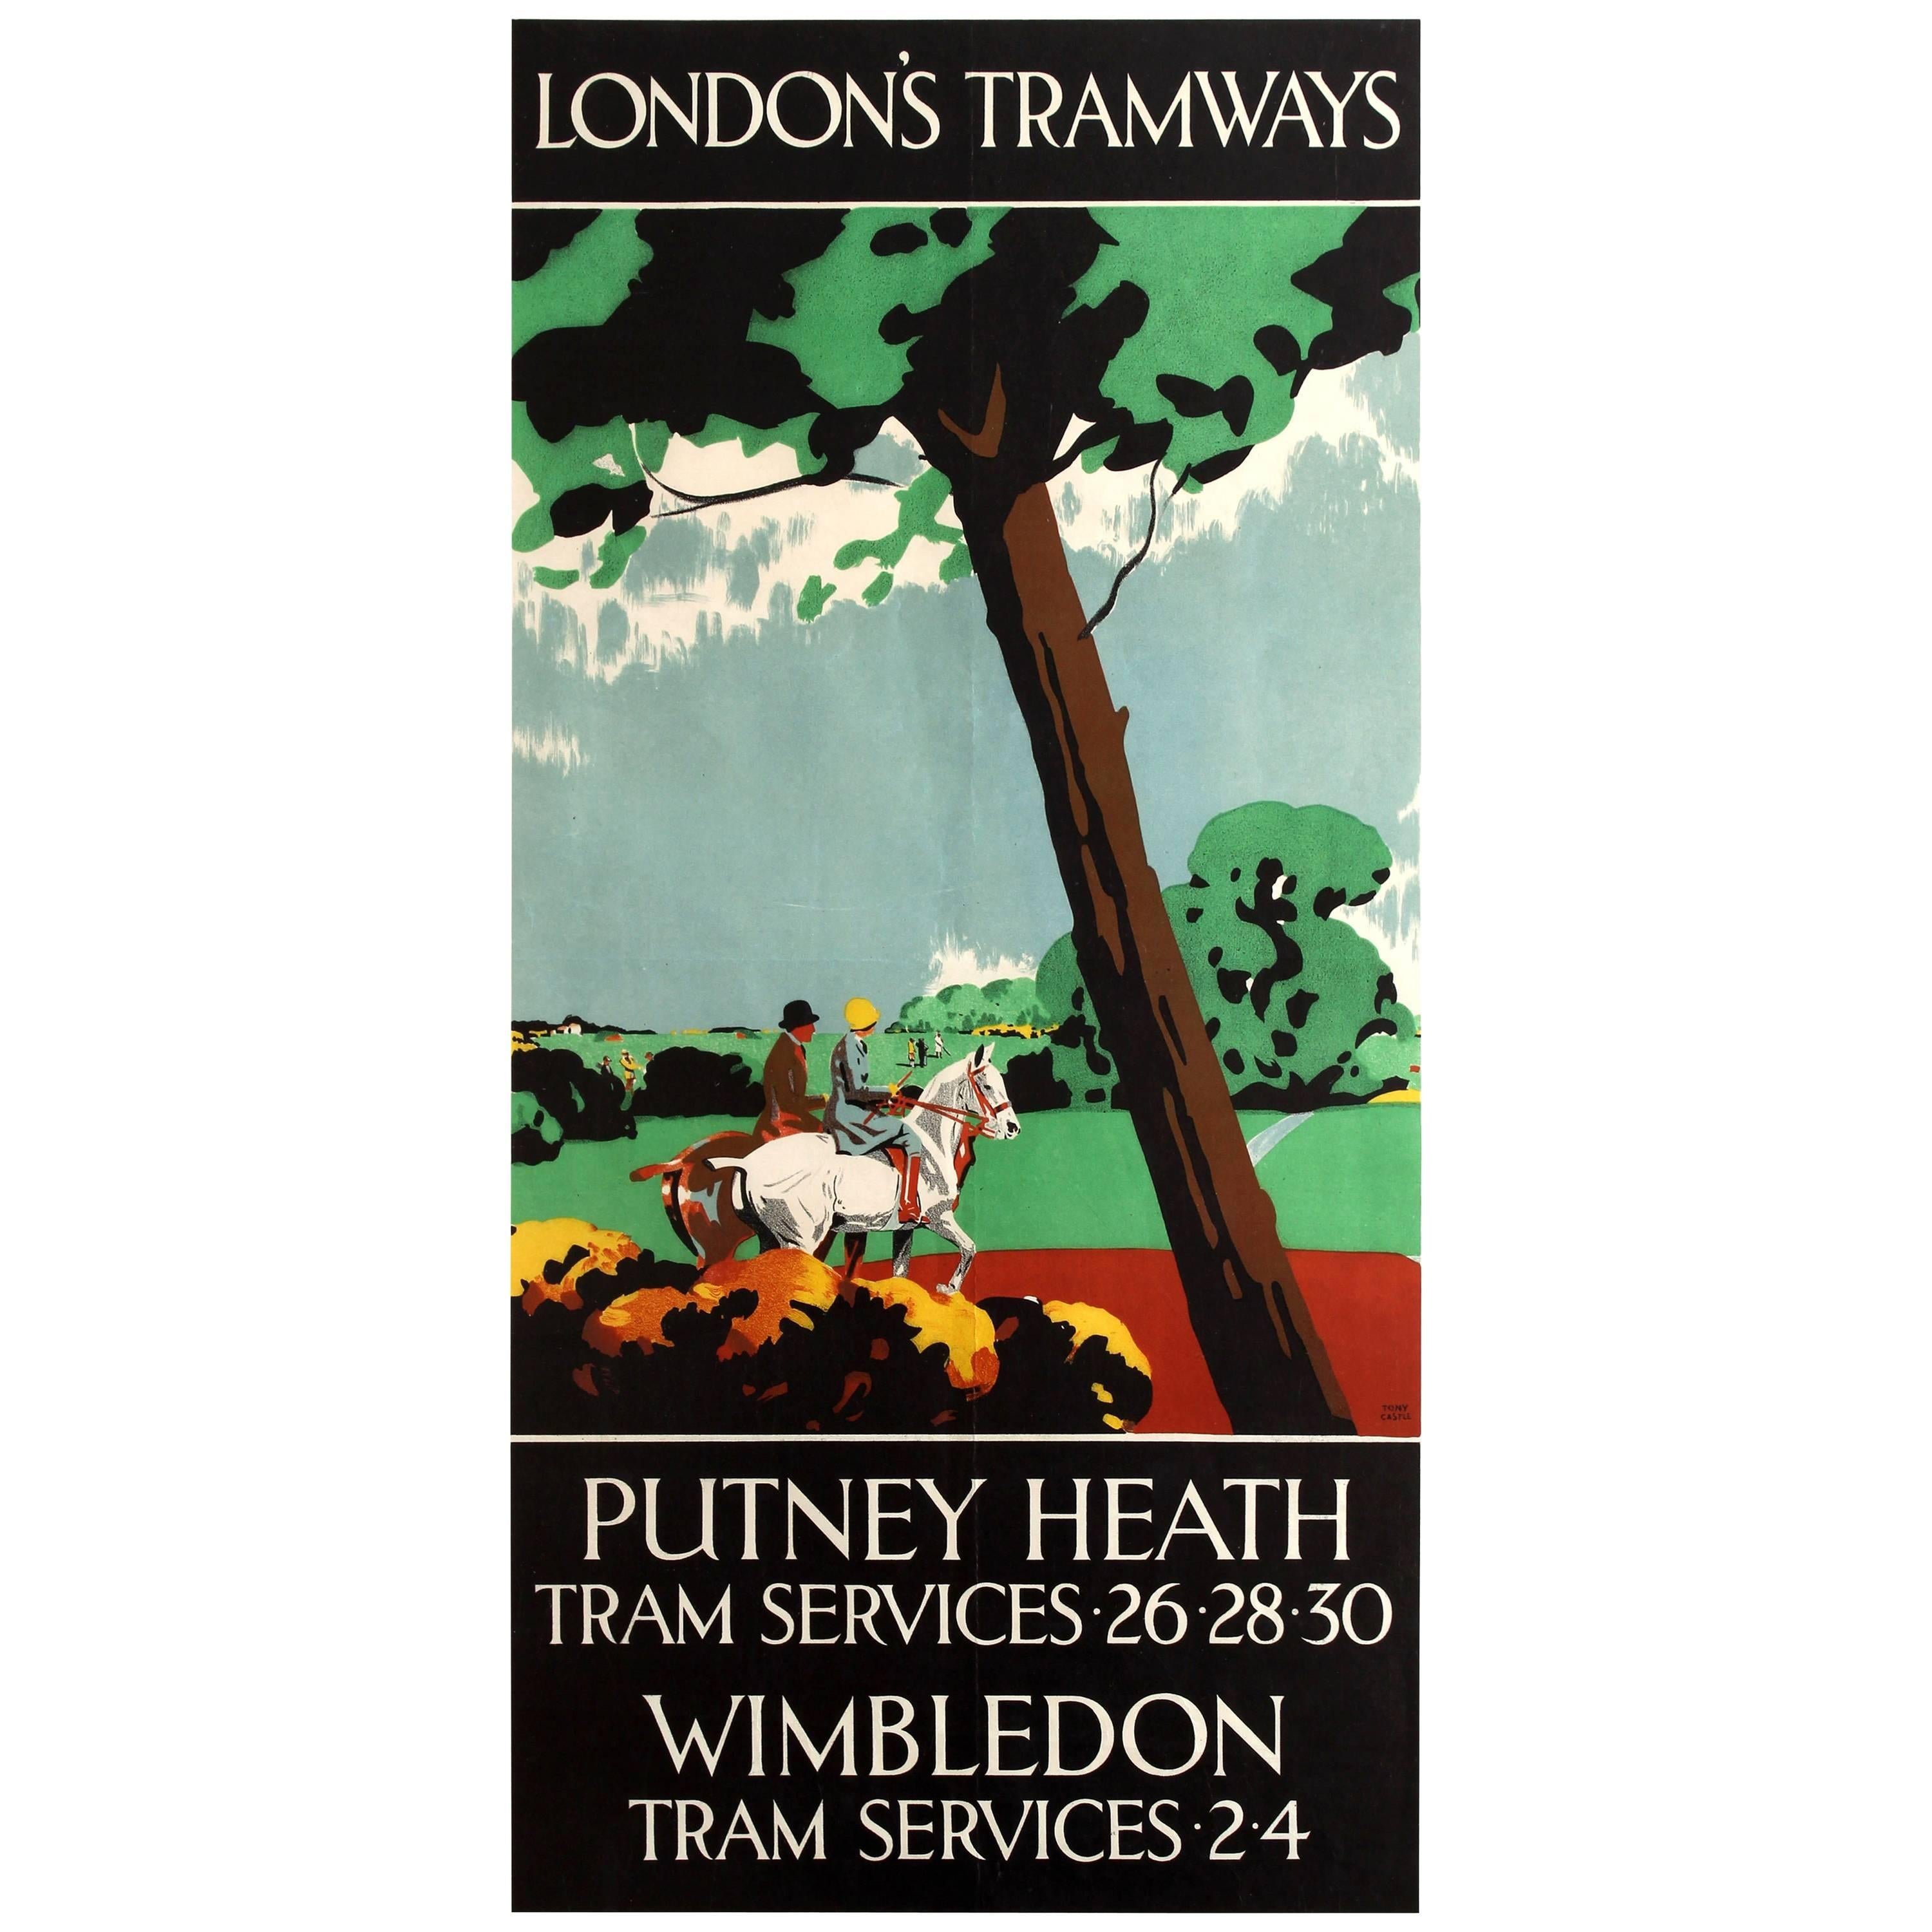 Original Vintage Art Deco London Tramways Poster for Putney Heath and Wimbledon For Sale